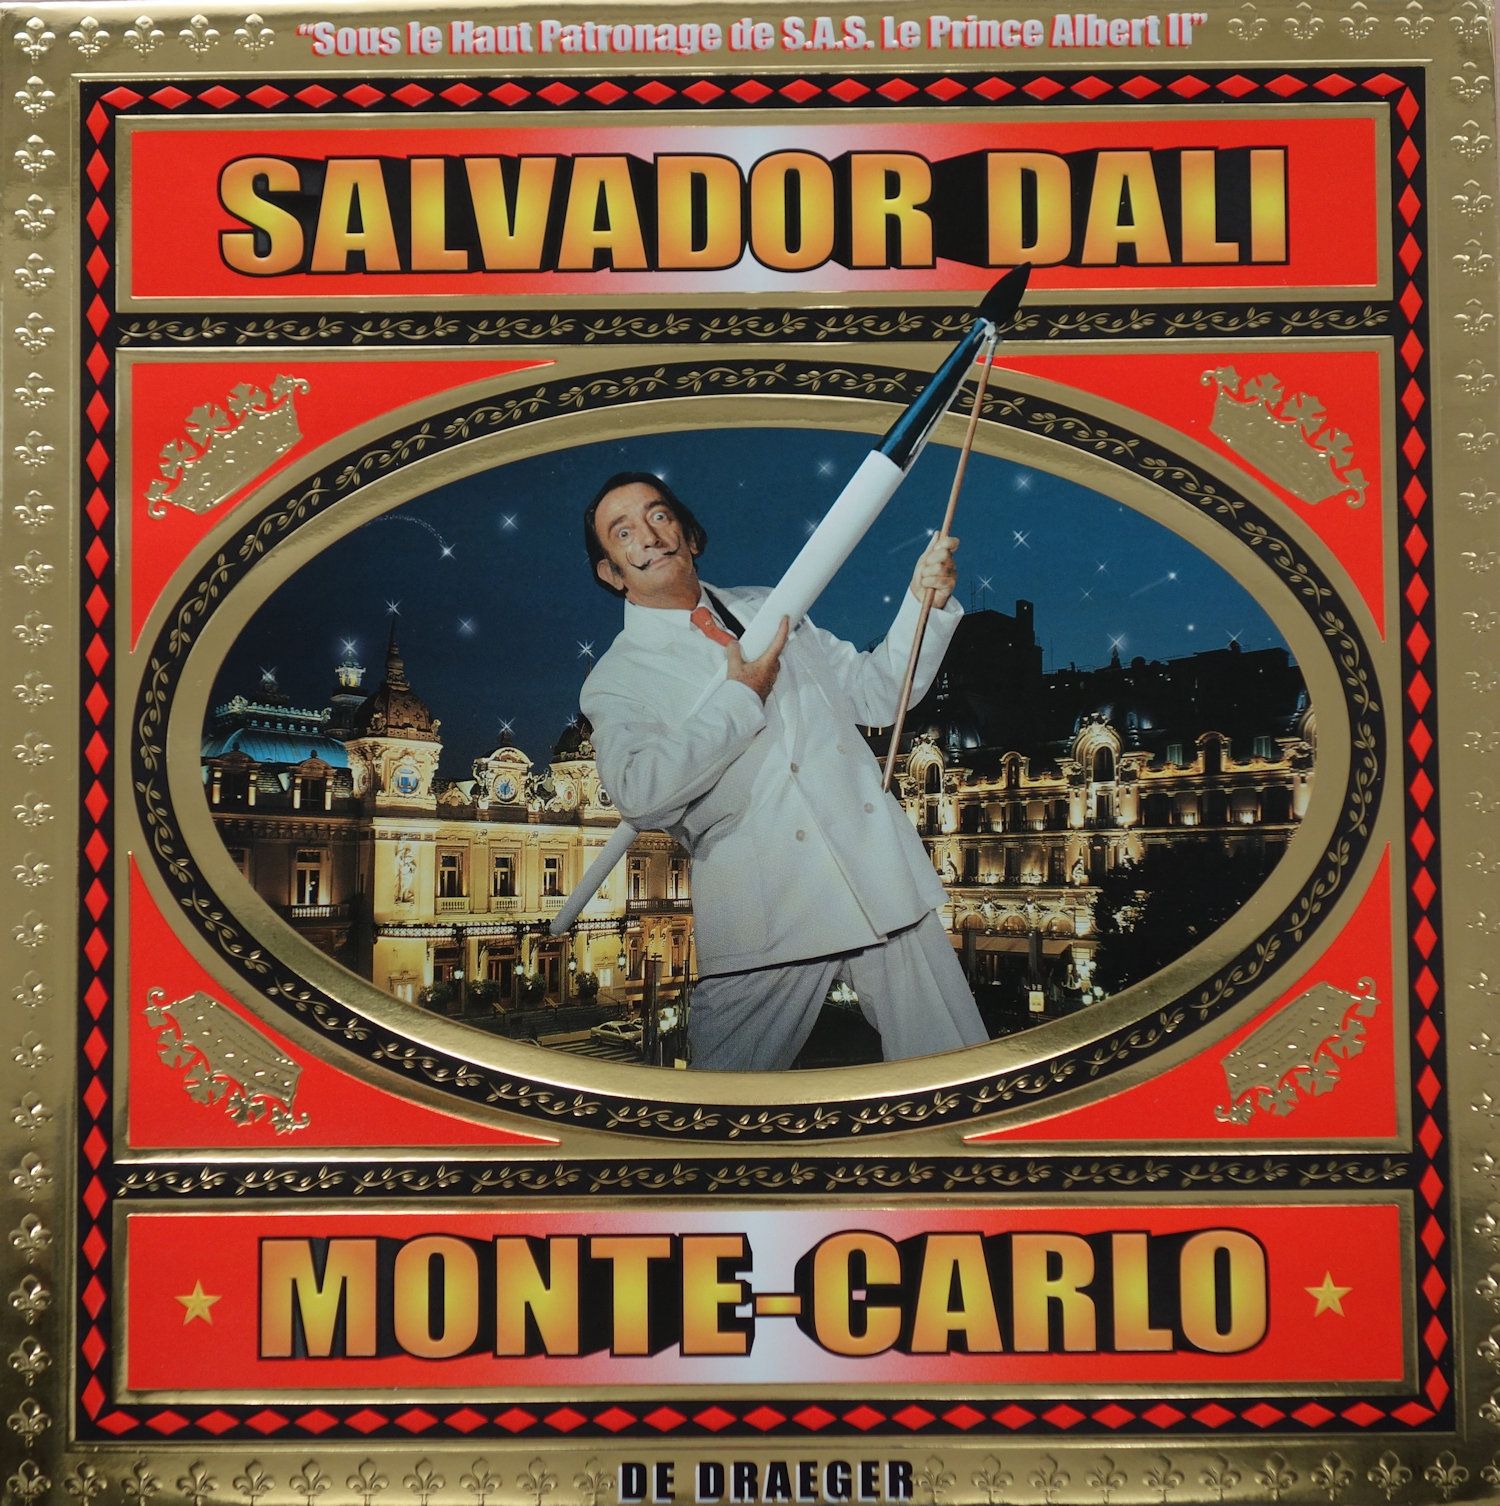 Salvador DALI 萨尔瓦多-达利

专辑/Draeger的Monte-Carlo

德雷格版2005

约220页，200多幅黑白或彩色插图

格式 &hellip;